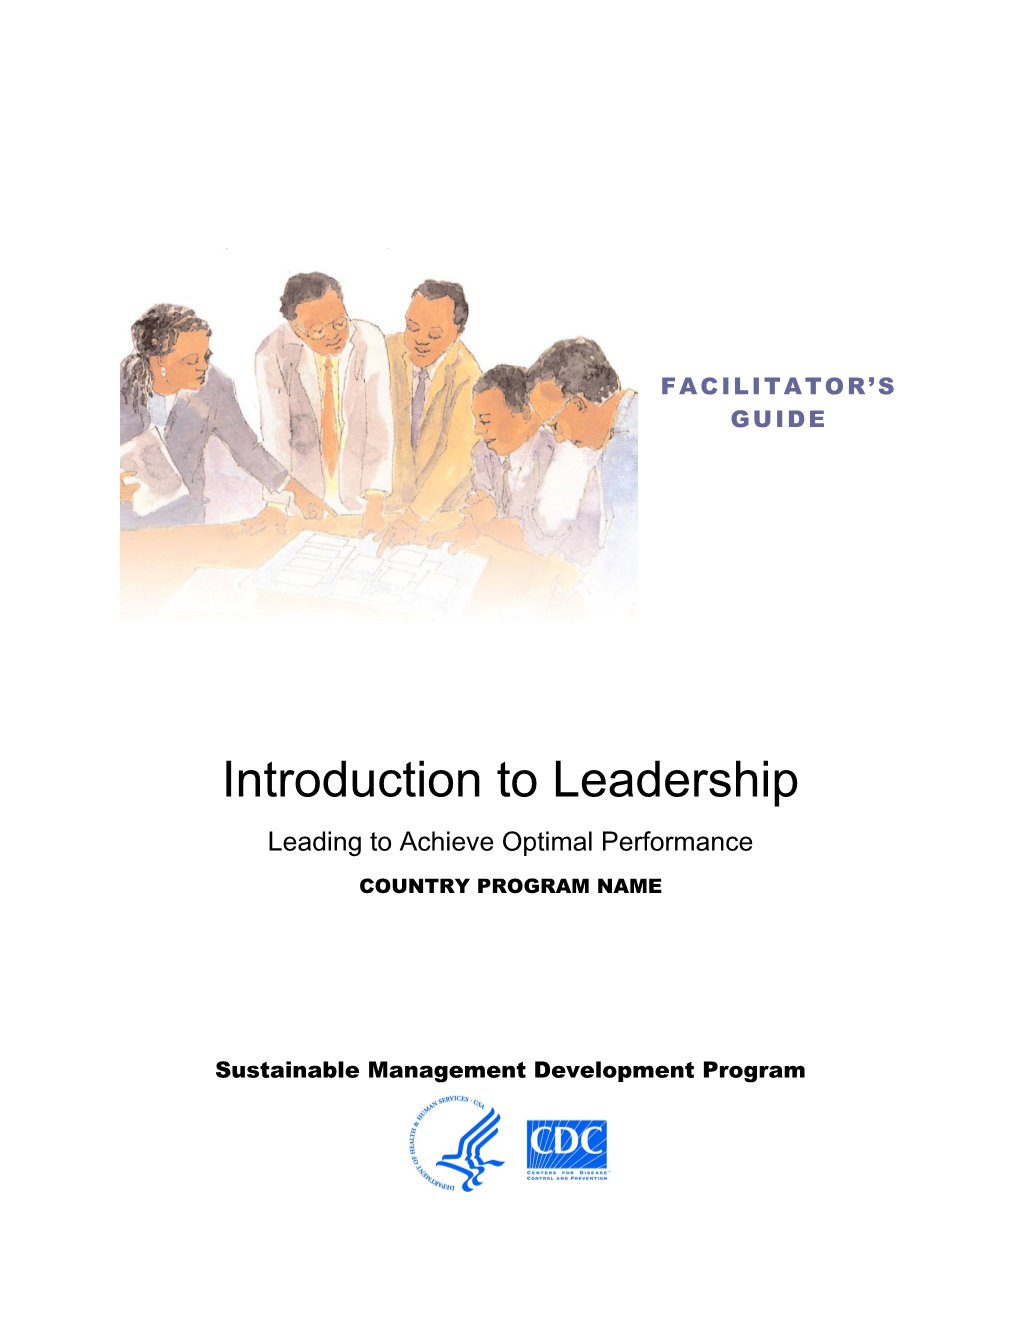 Facilitator's Guide - Leadership